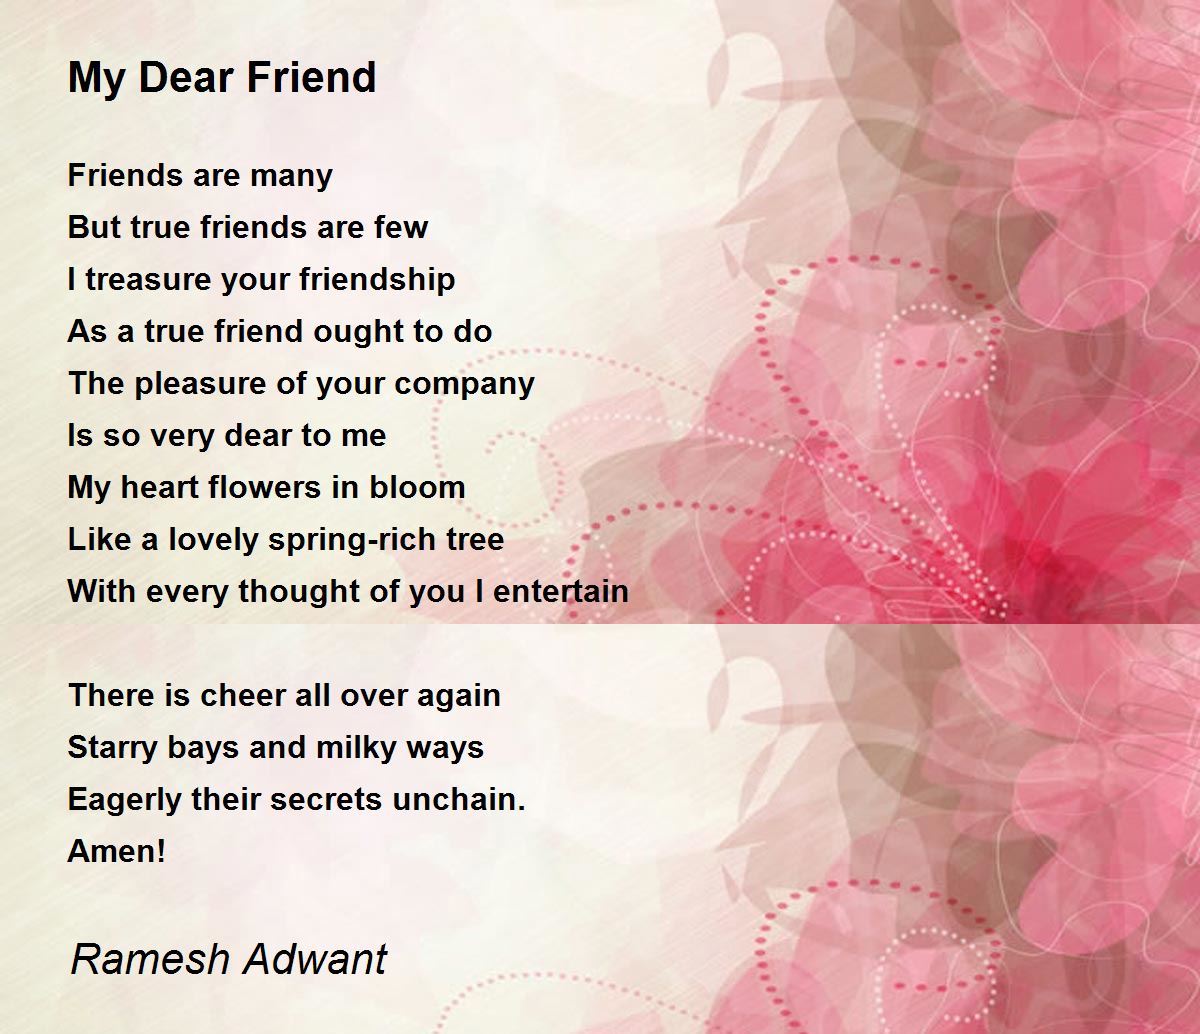 My Dear Friend - My Dear Friend Poem by Ramesh Adwant